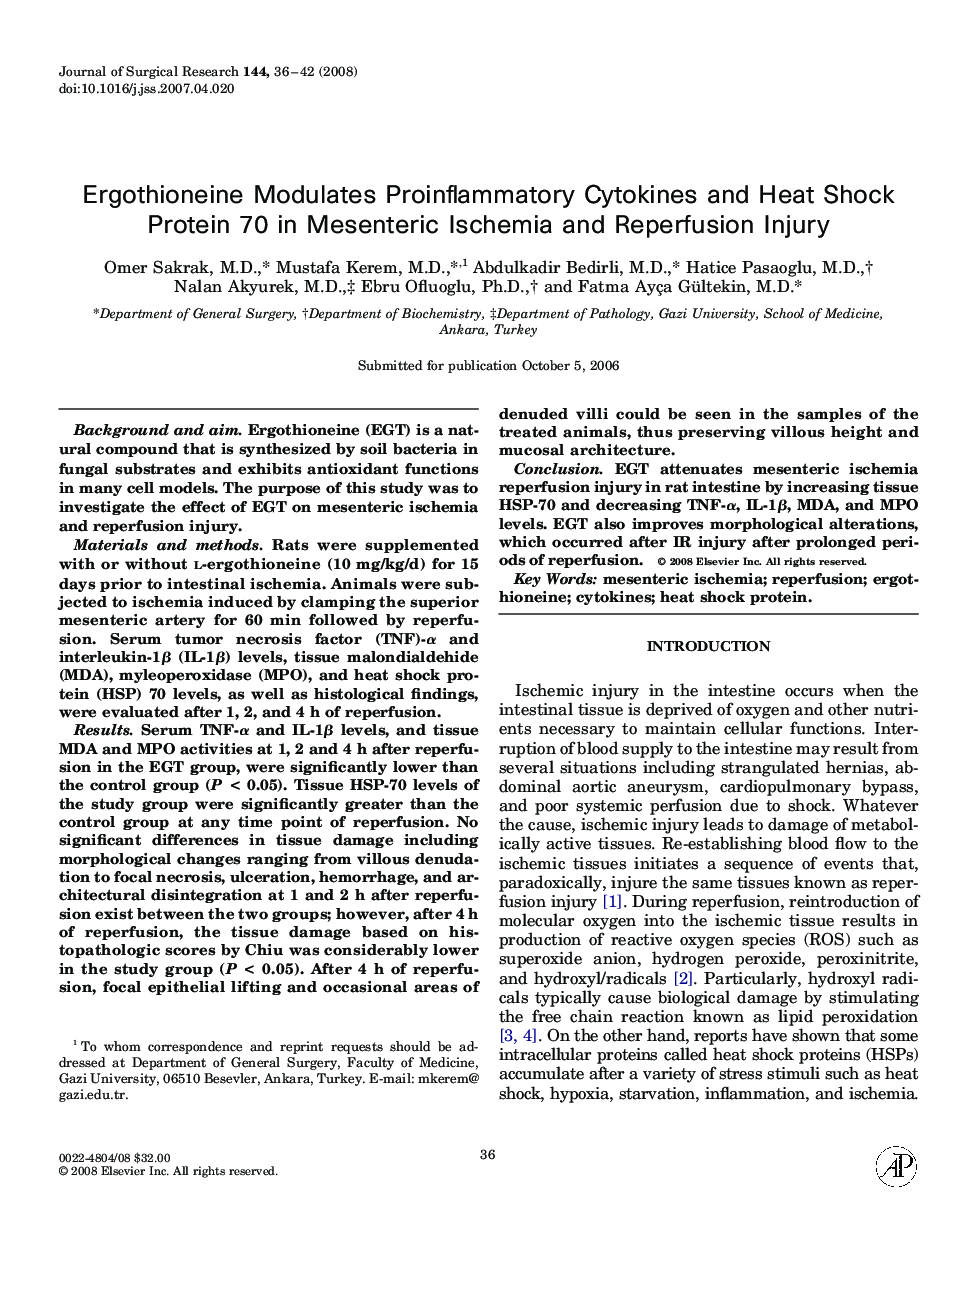 Ergothioneine Modulates Proinflammatory Cytokines and Heat Shock Protein 70 in Mesenteric Ischemia and Reperfusion Injury